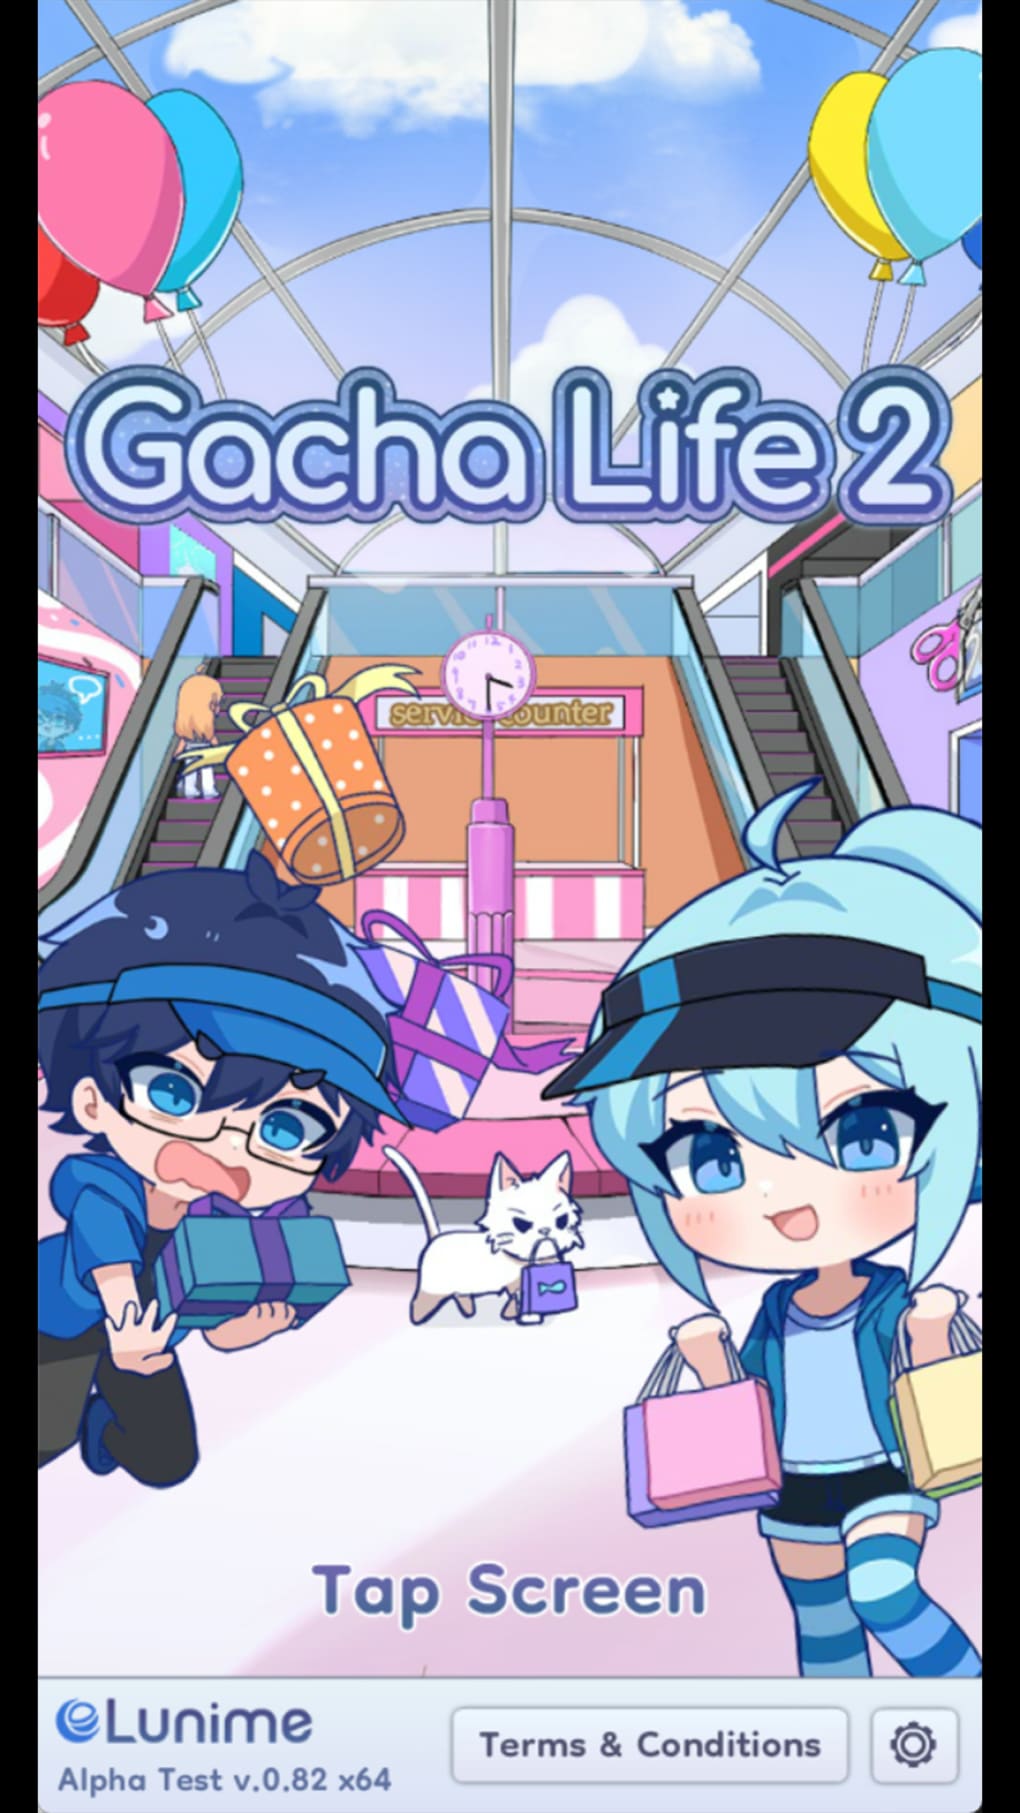 Gacha Life 2 Released Early On iOS